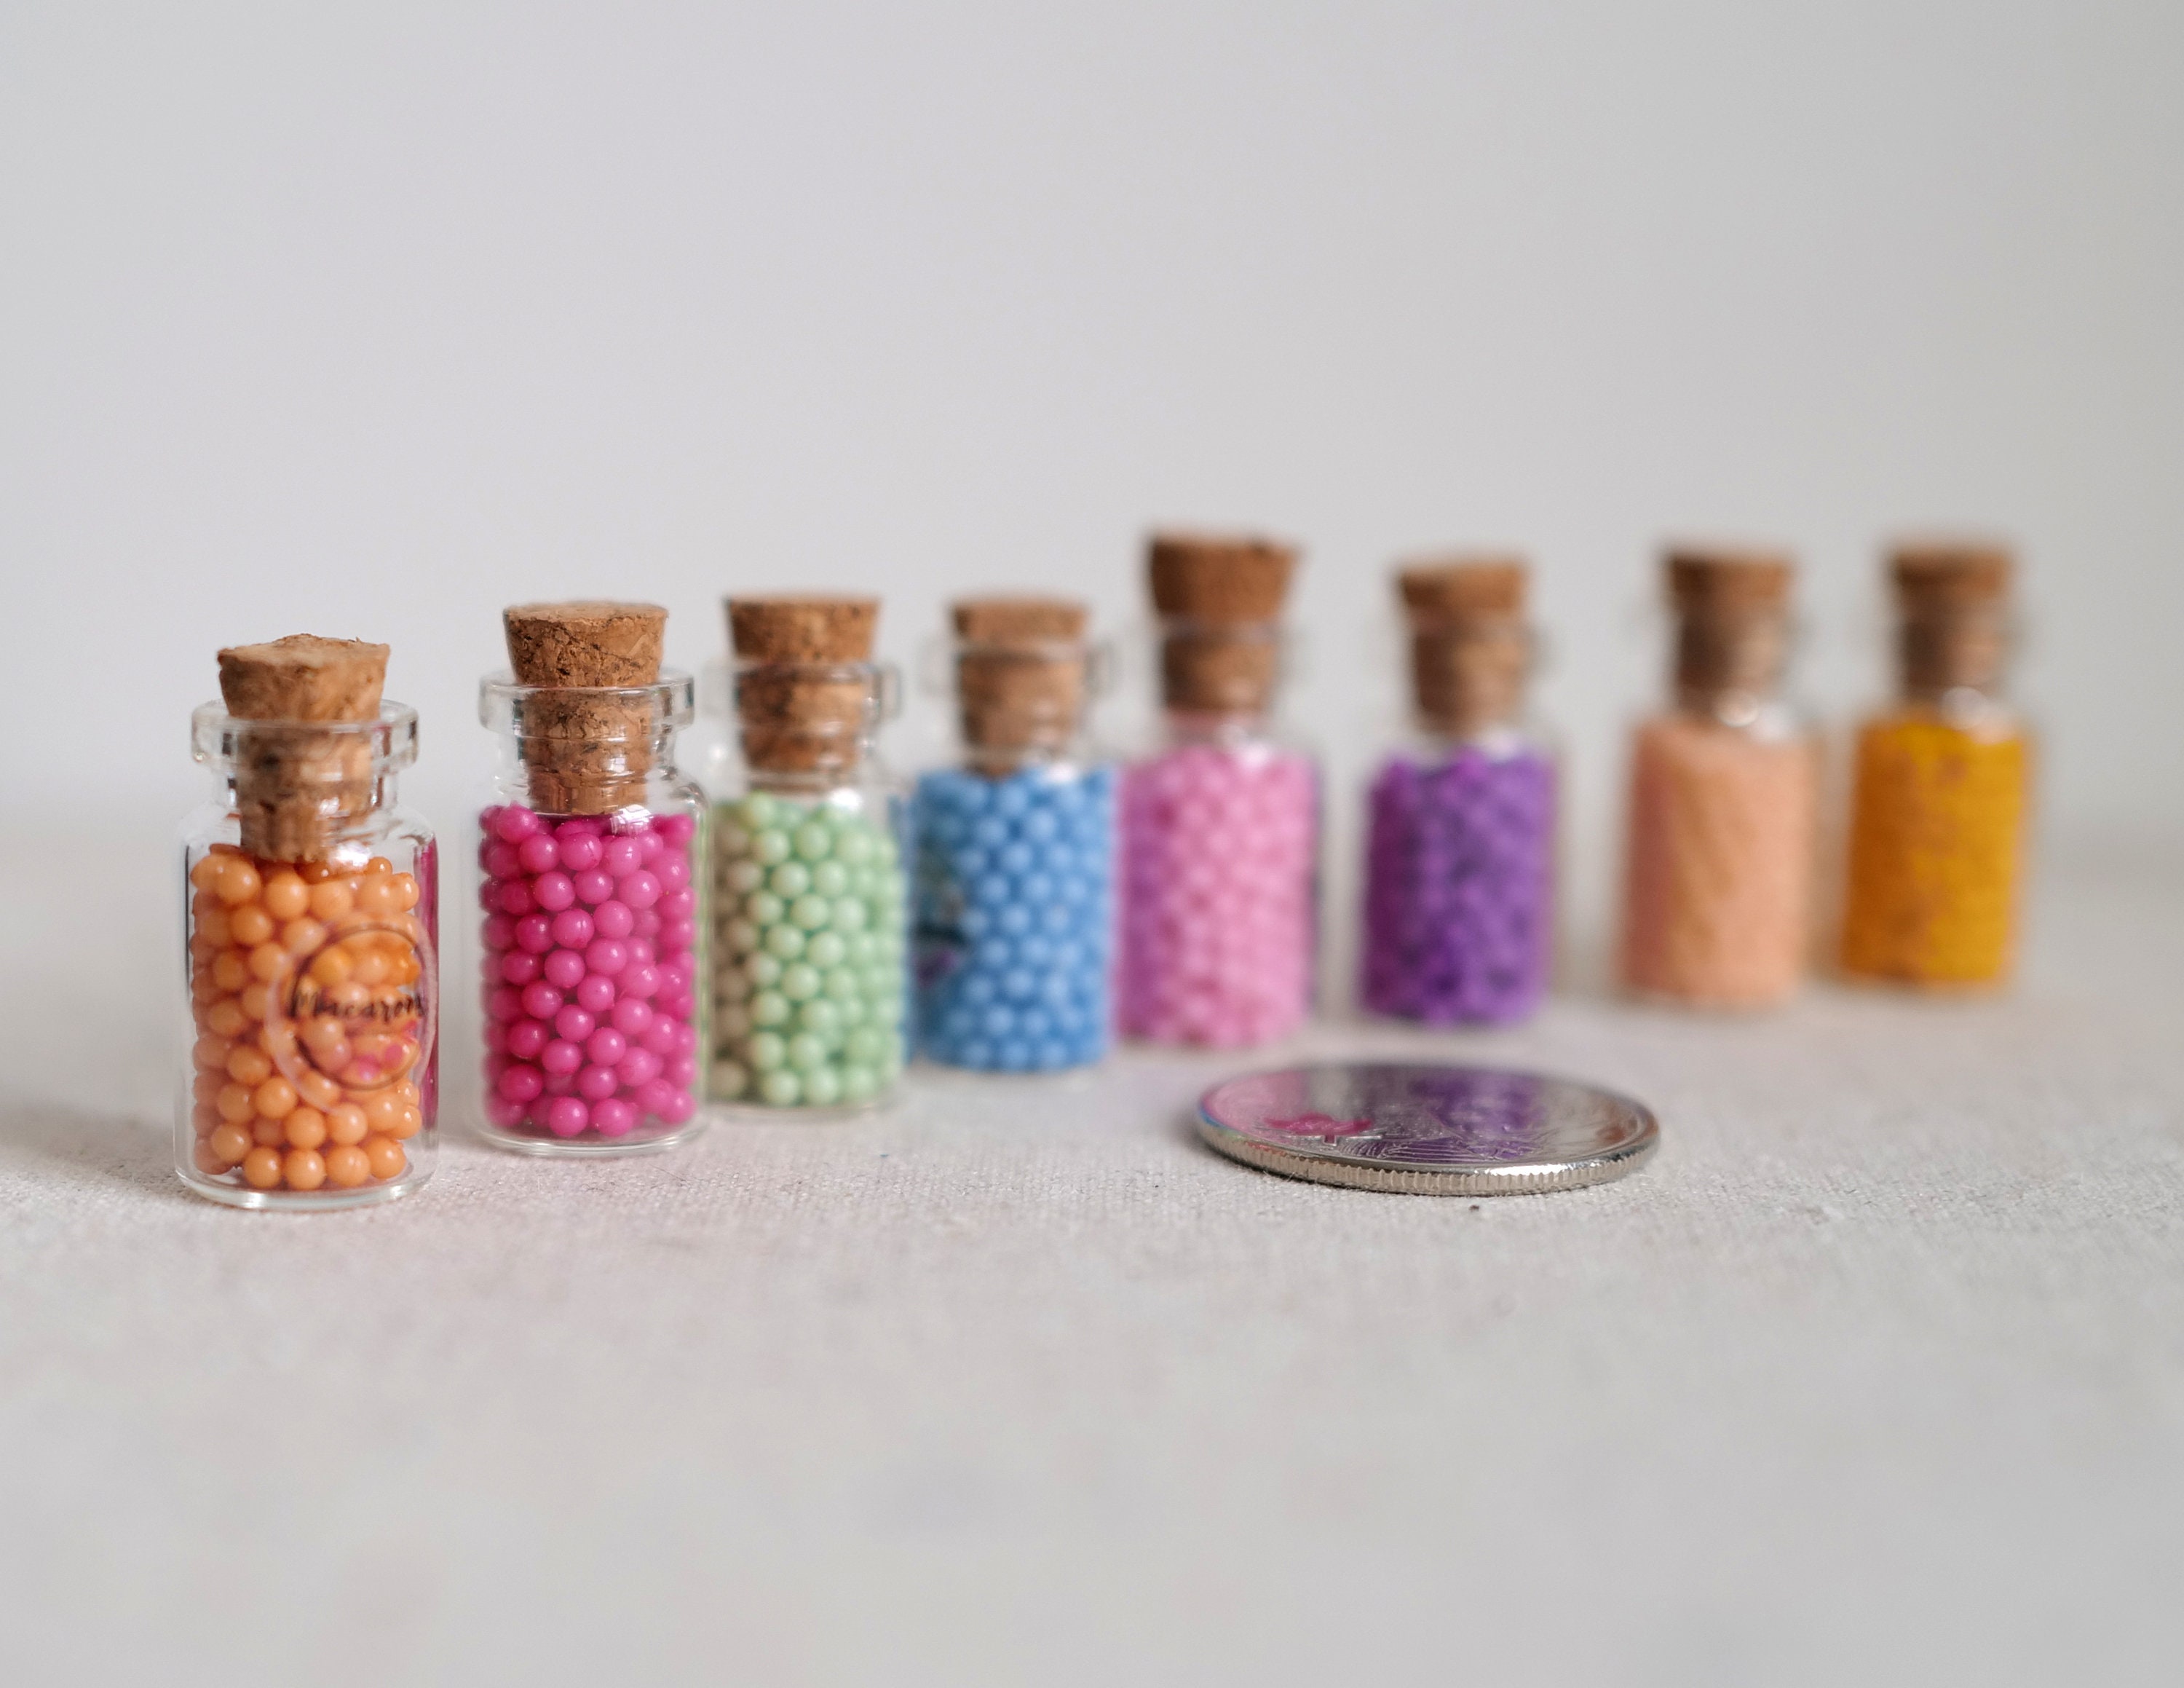 Dollhouse Spice Seed Jars, 4 pc, IM65005